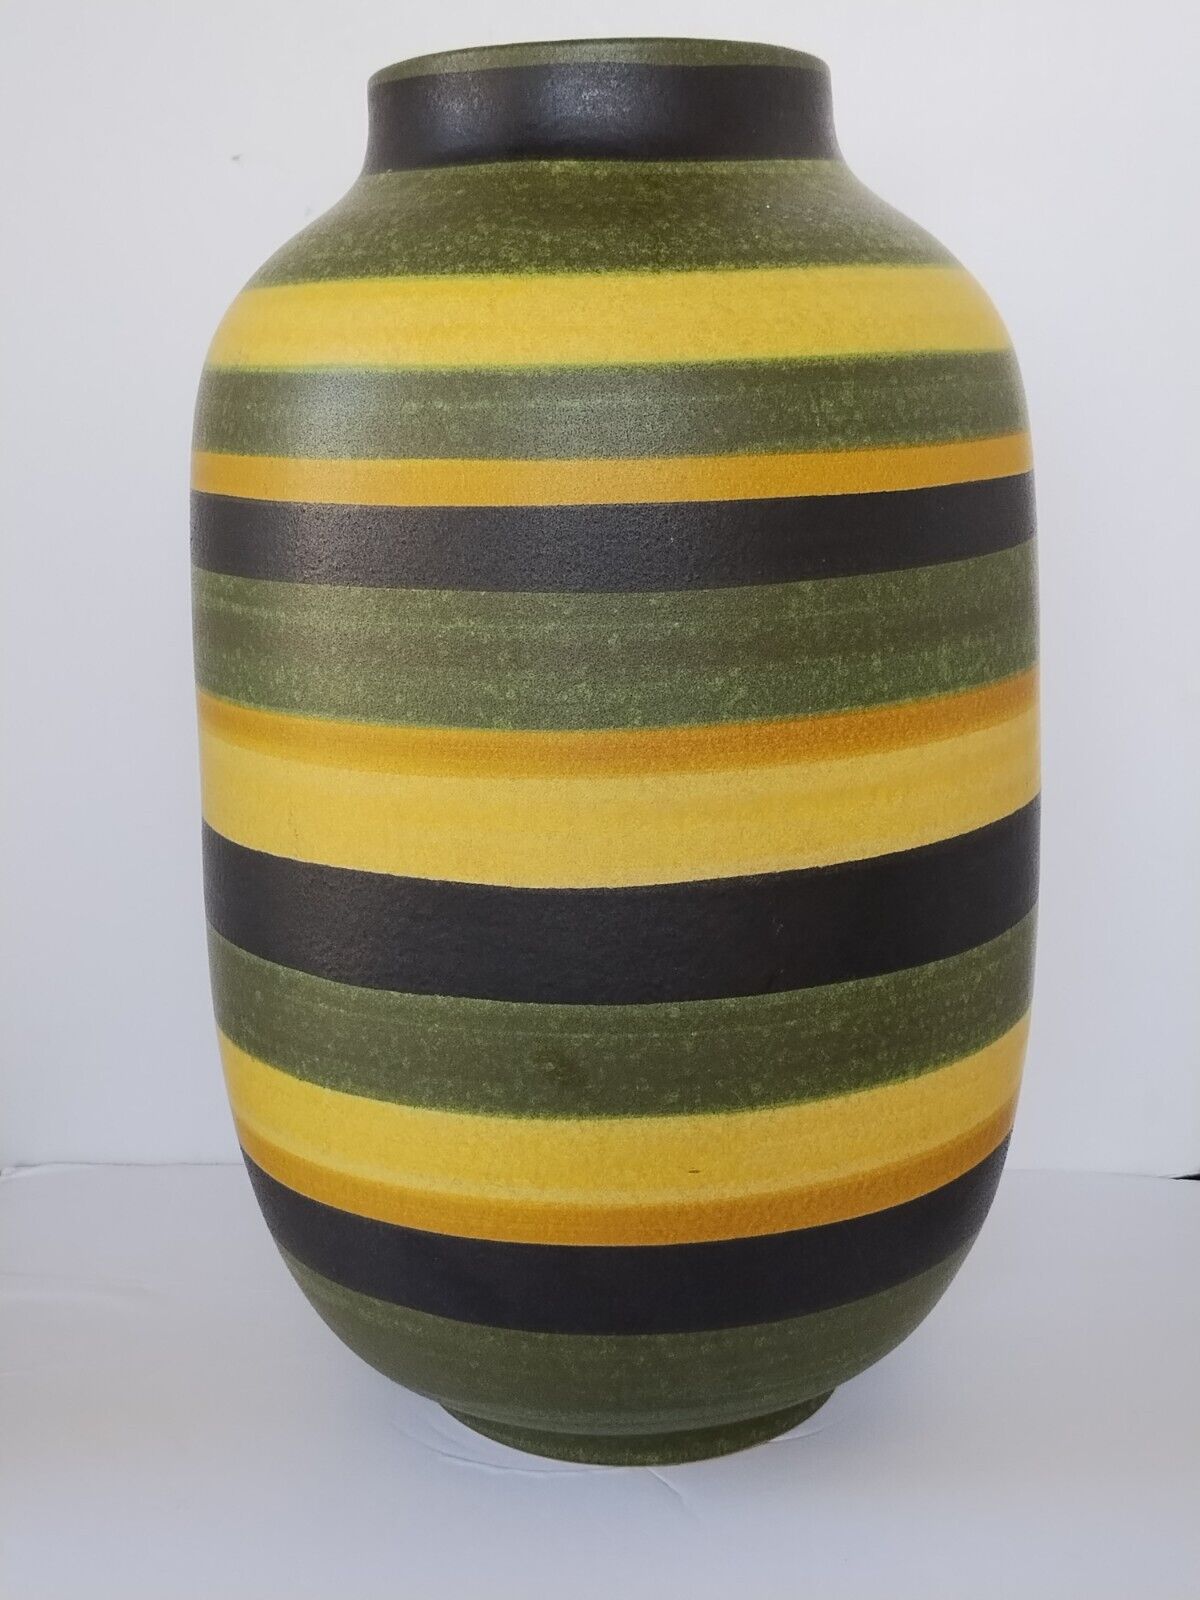 Giant Rare Signed Alvino Bagni Art Pottery Raymor Bitossi Italy Floor Vase